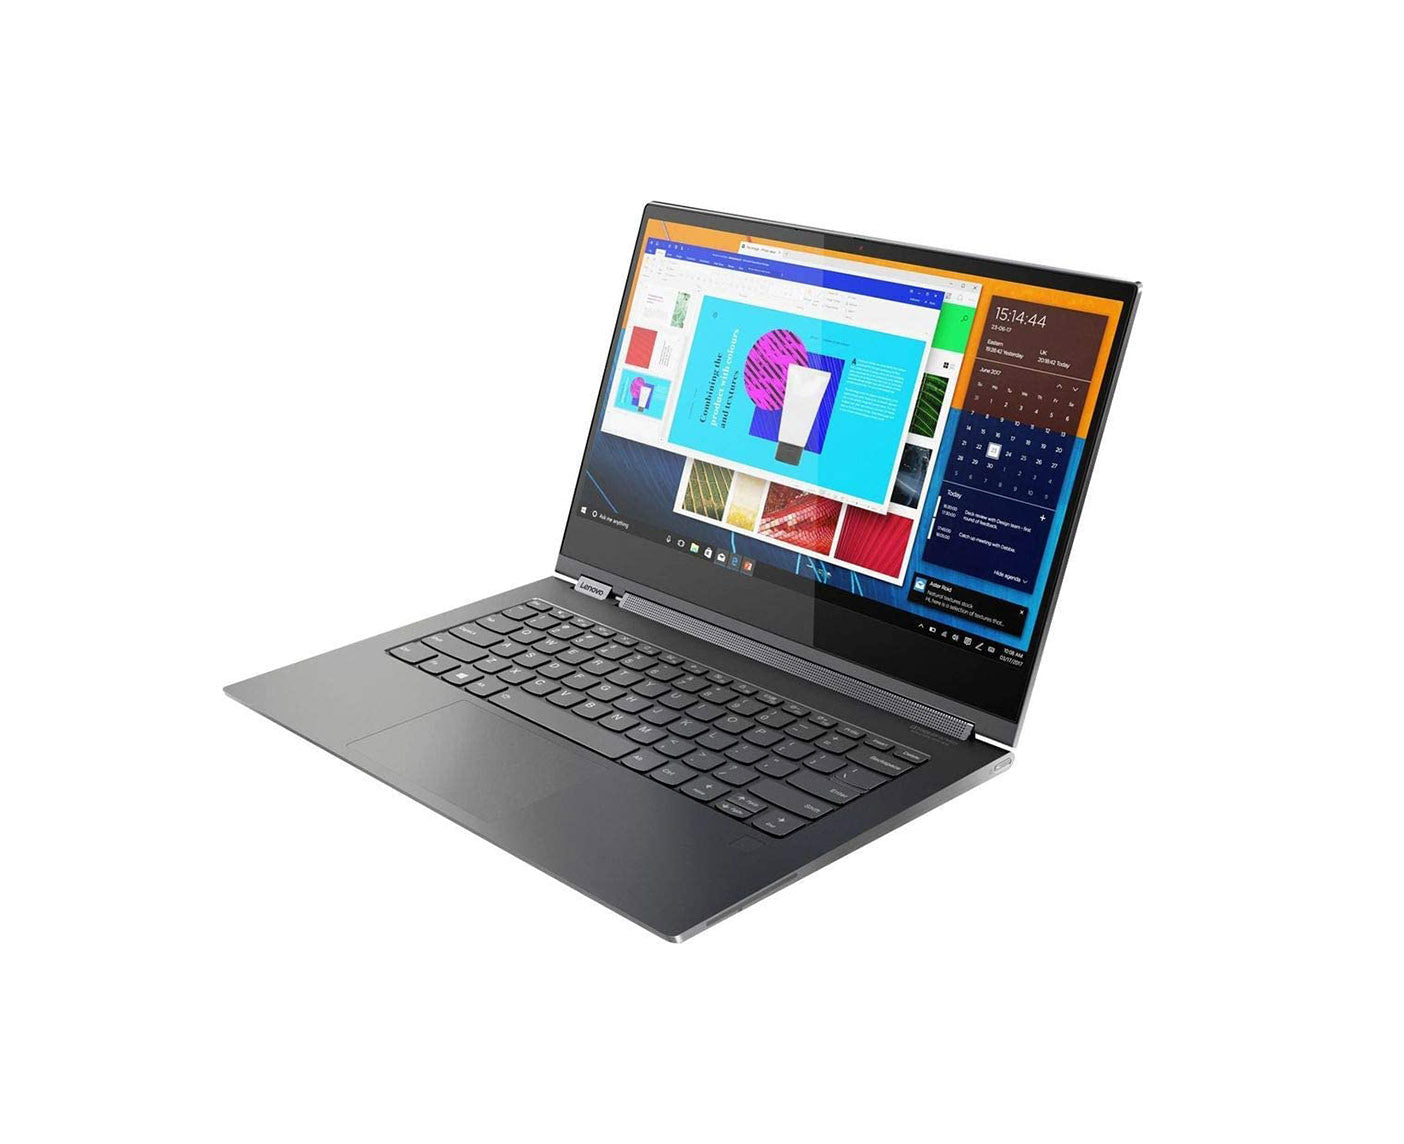 Lenovo Yoga 14 inch C930 Touchscreen i5 8th Gen 8GB 256GB SSD